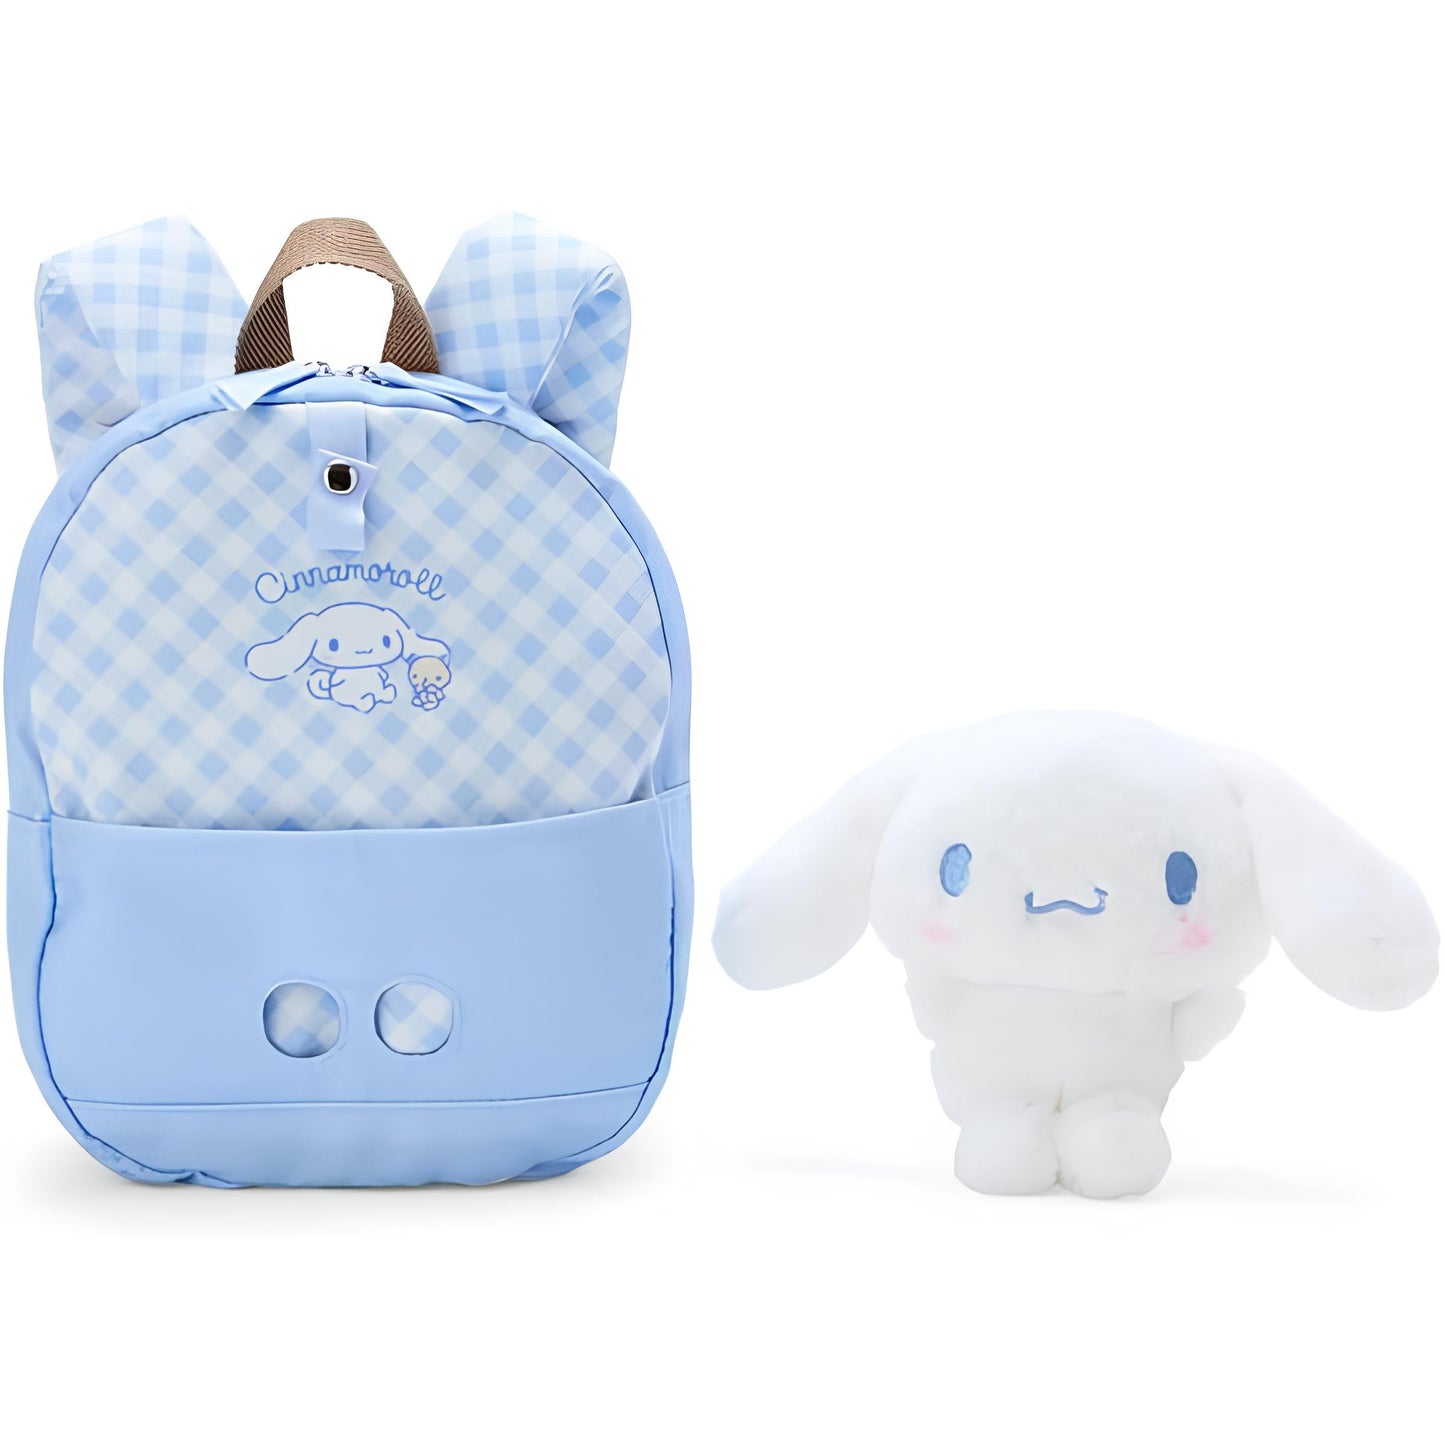 Sanrio Japan Kids Backpack With Cinnamoroll Plush